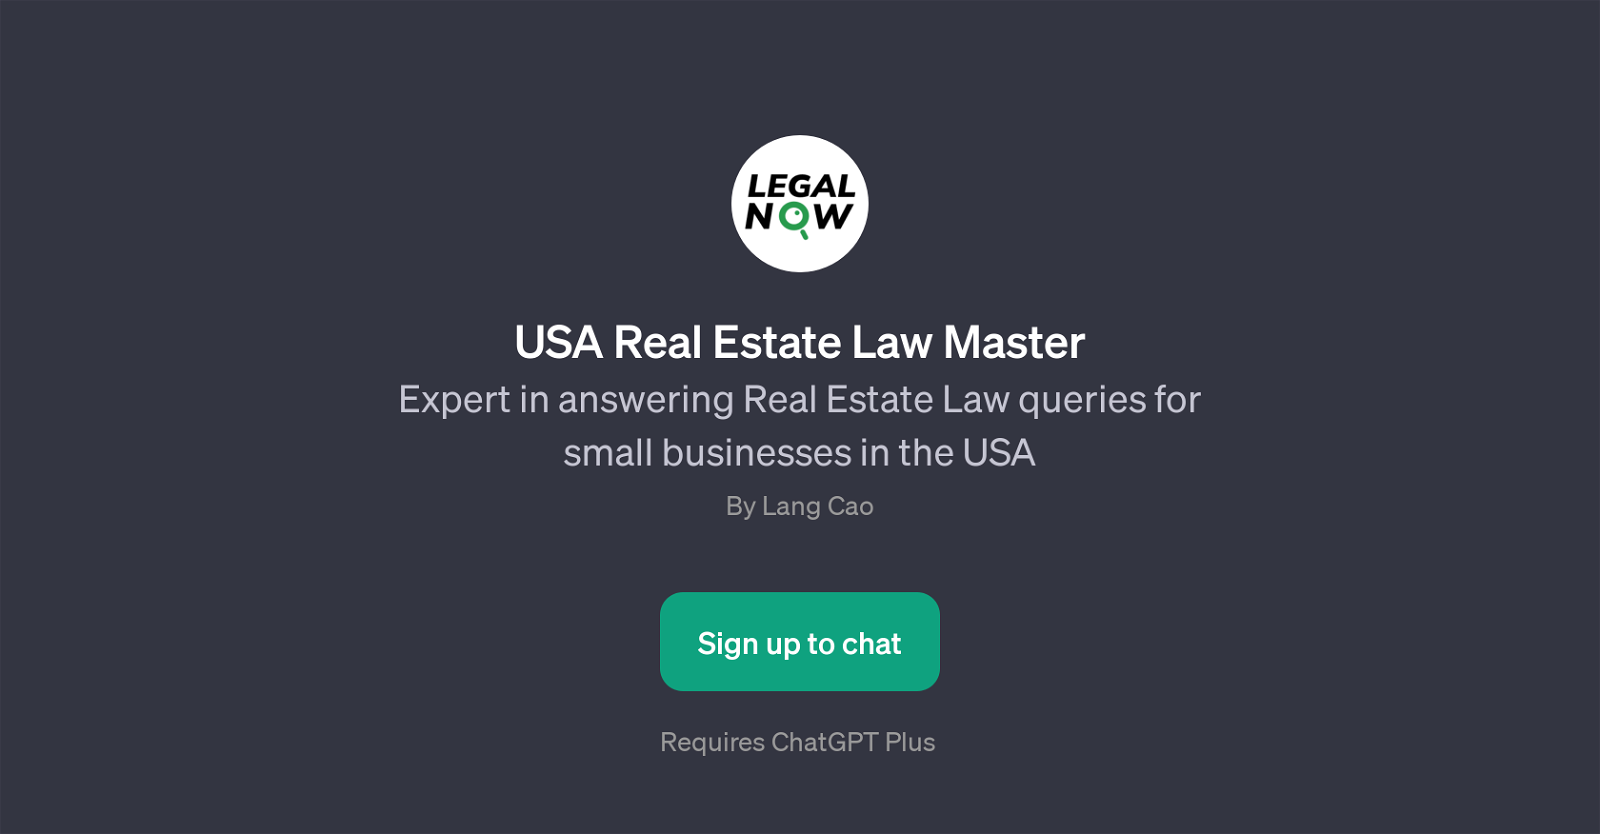 USA Real Estate Law Master website